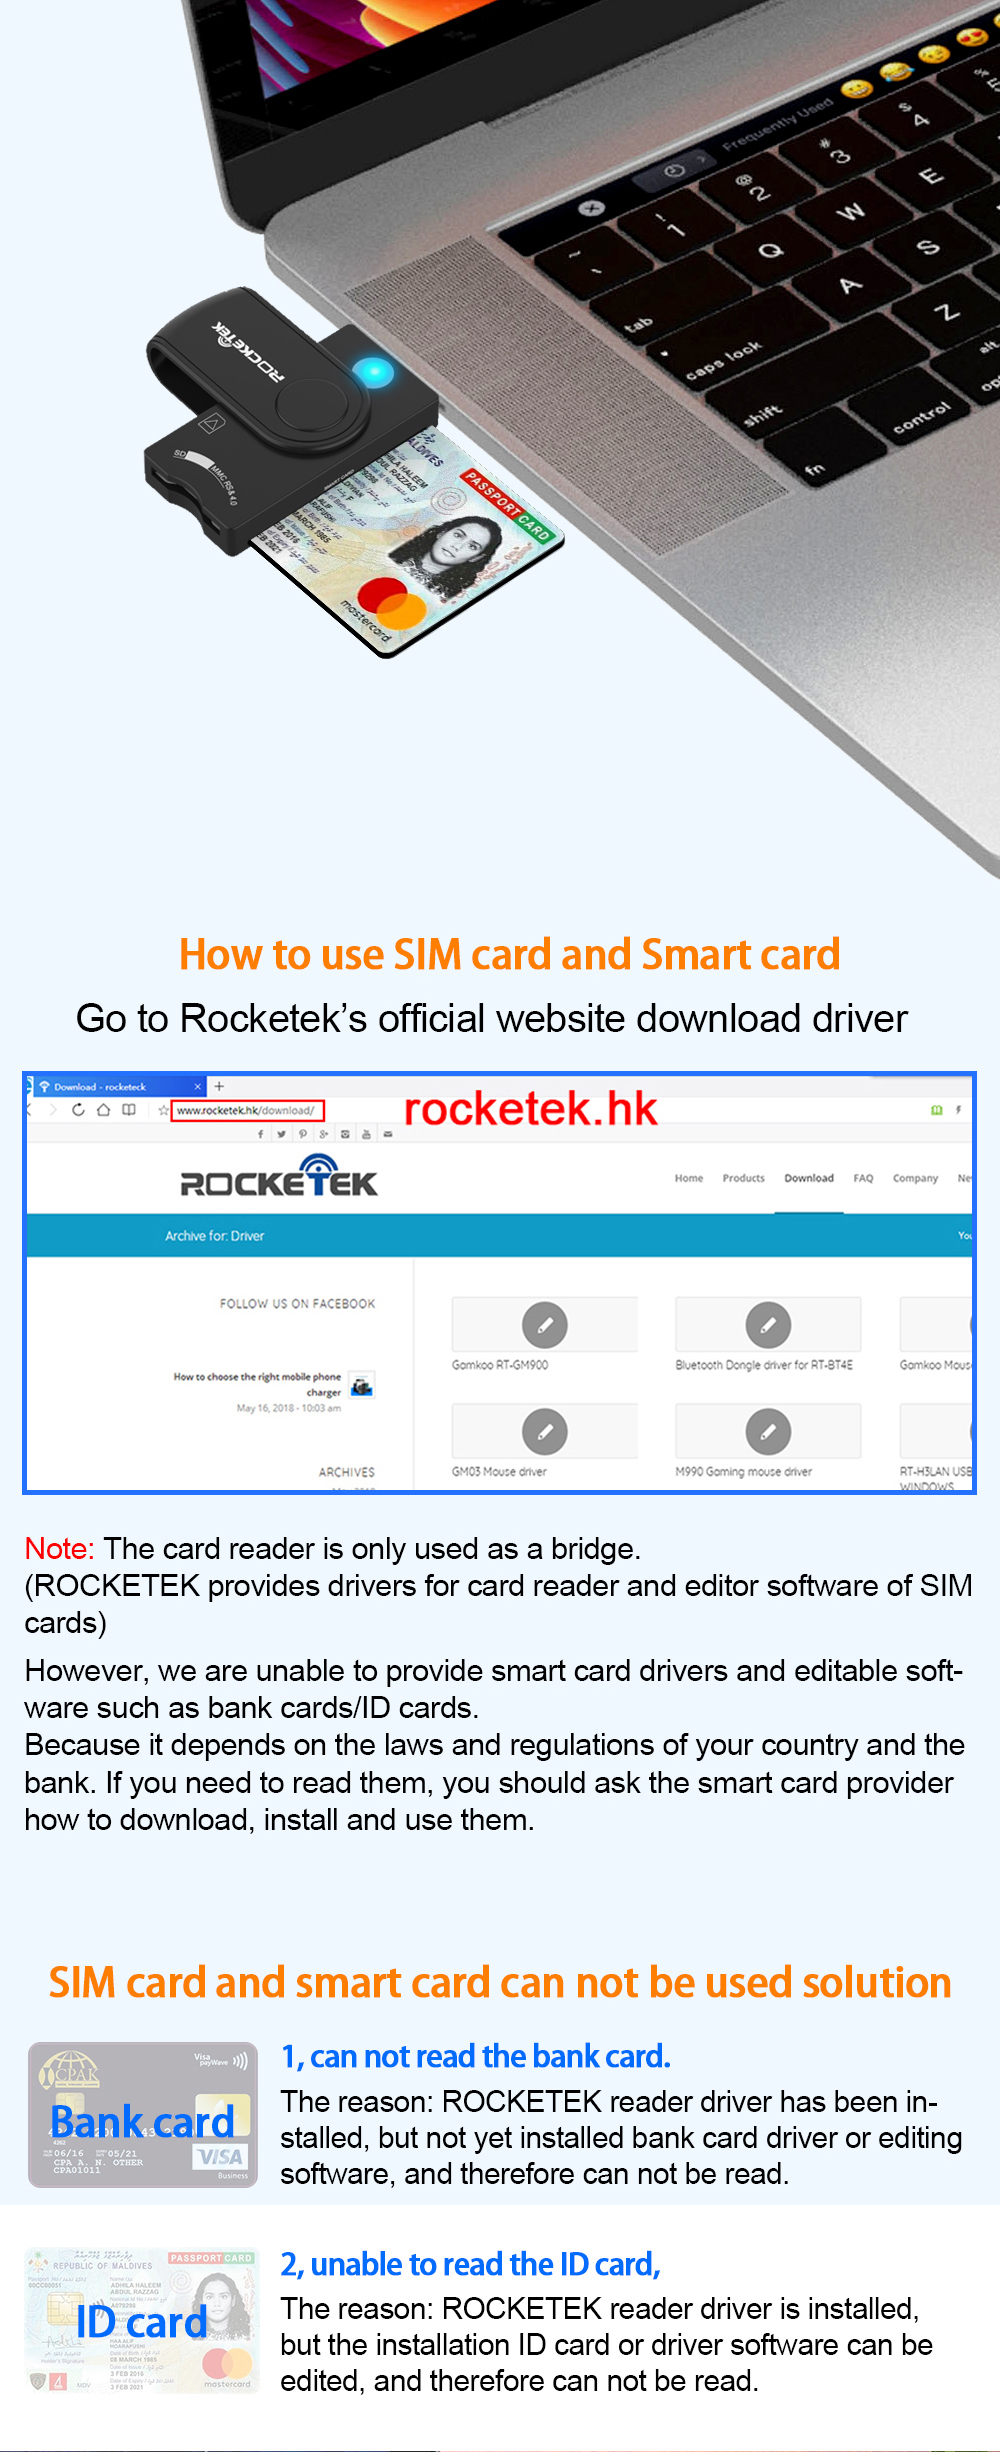 Rocketek-USB20-Card-Reader-SD-TF-Memory-Card-ID-Bank-EMV-4-In-1-Smart-Card-Reader-4-In-1-1743938-4